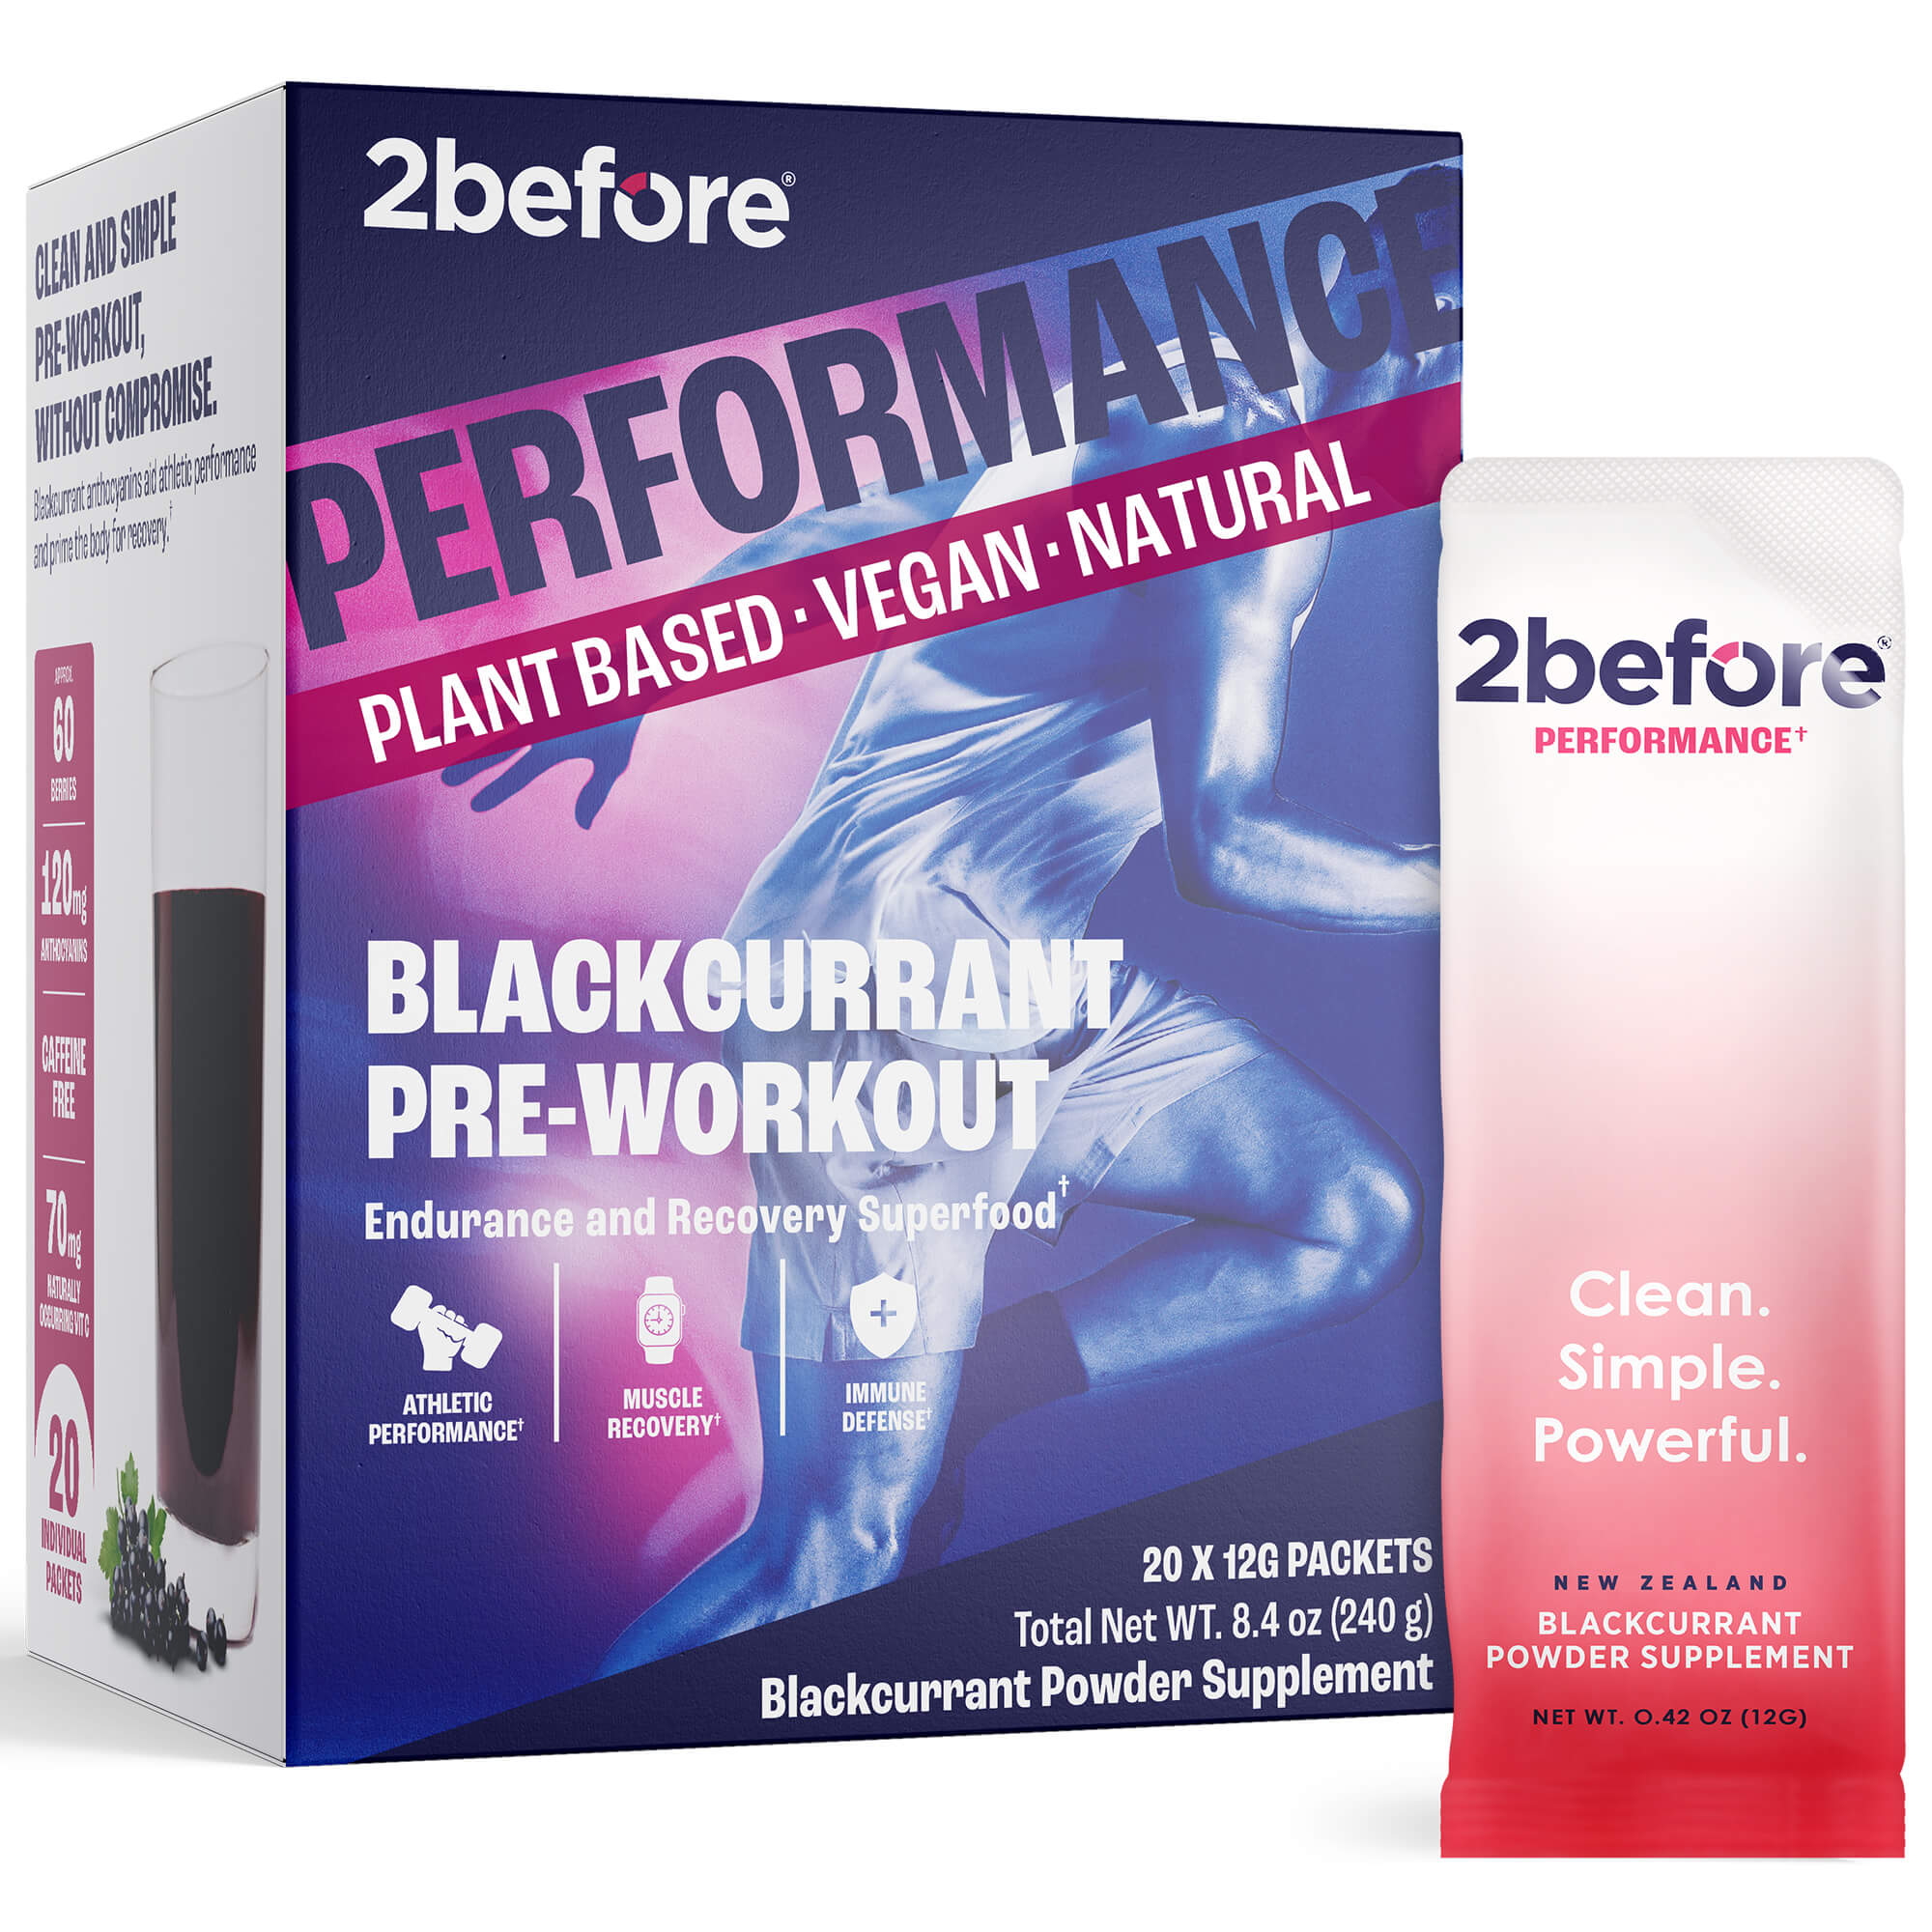 2before blackcurrant powder pre-workout - caffeine free